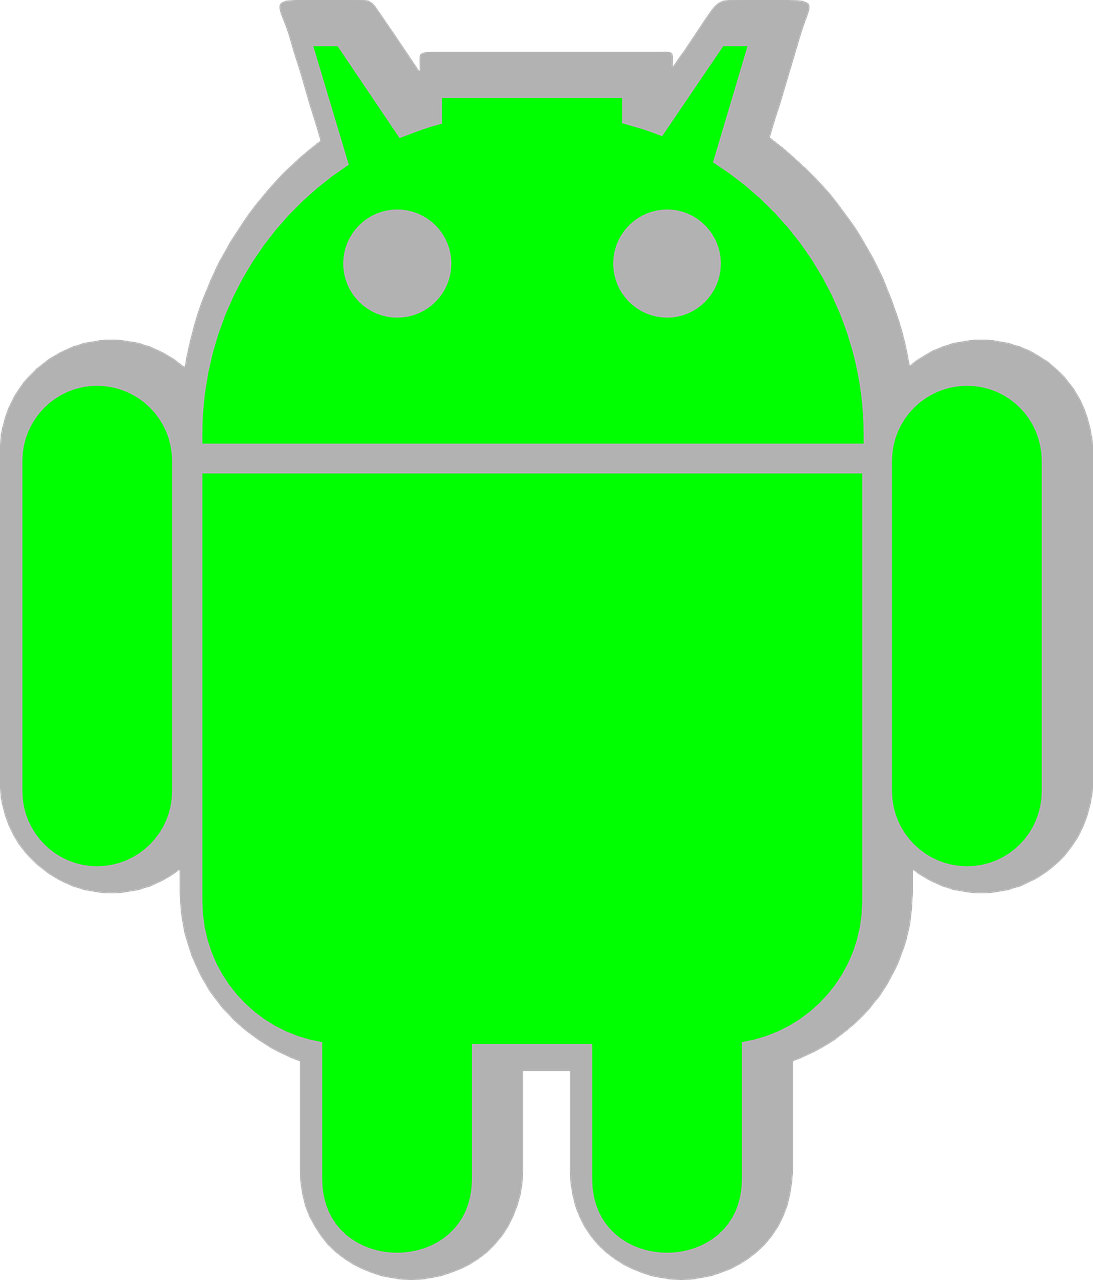 android internet tegnologia free photo